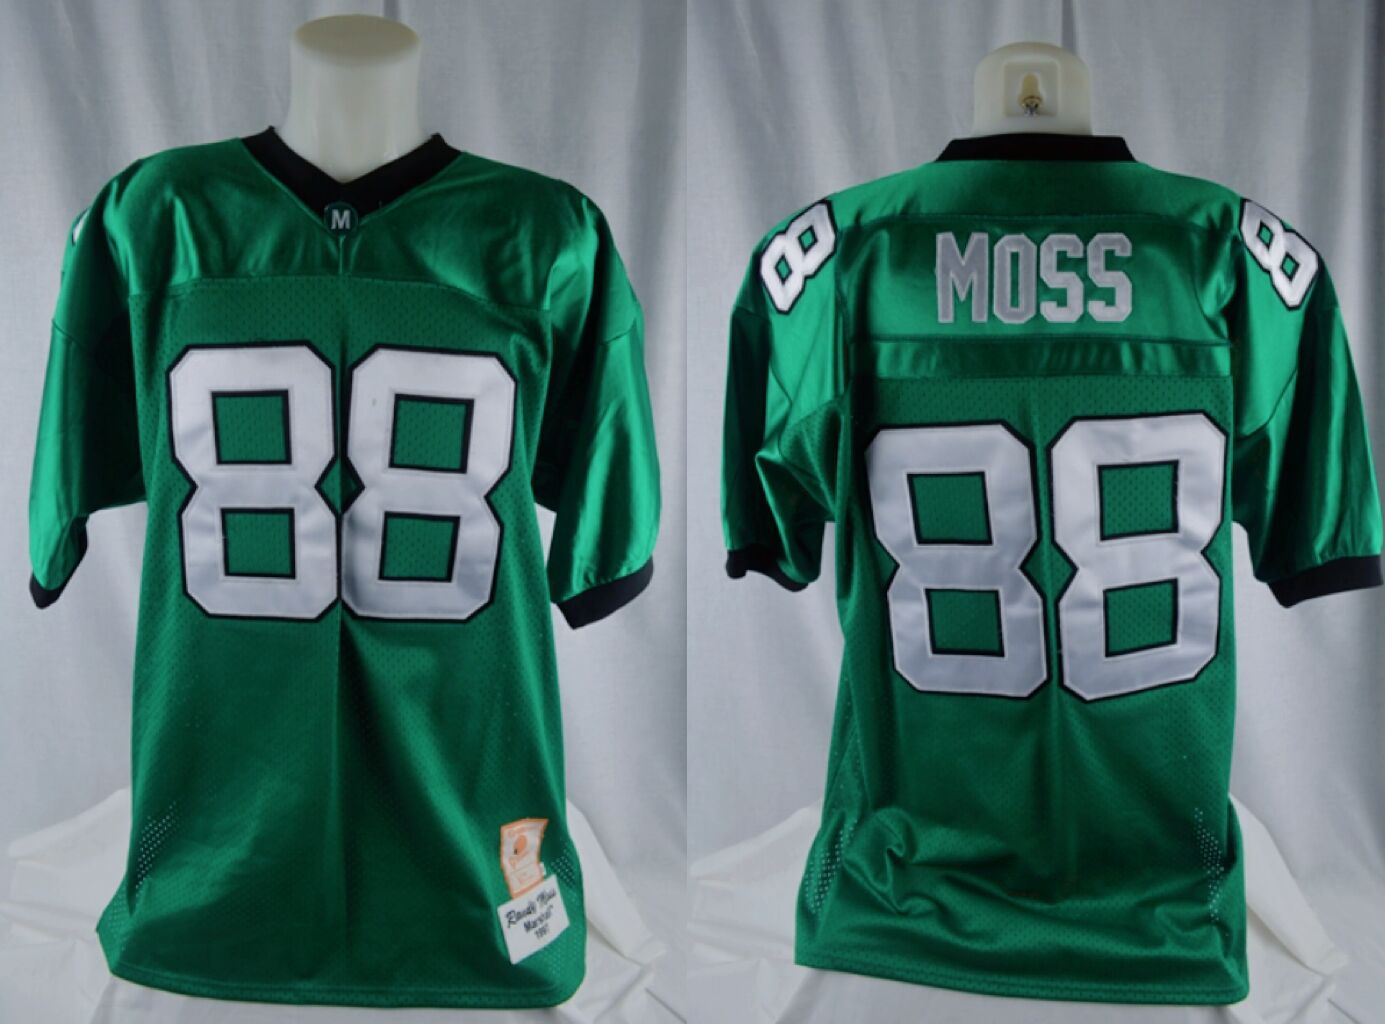 Randy Moss 1997 Marshall University Football Jersey